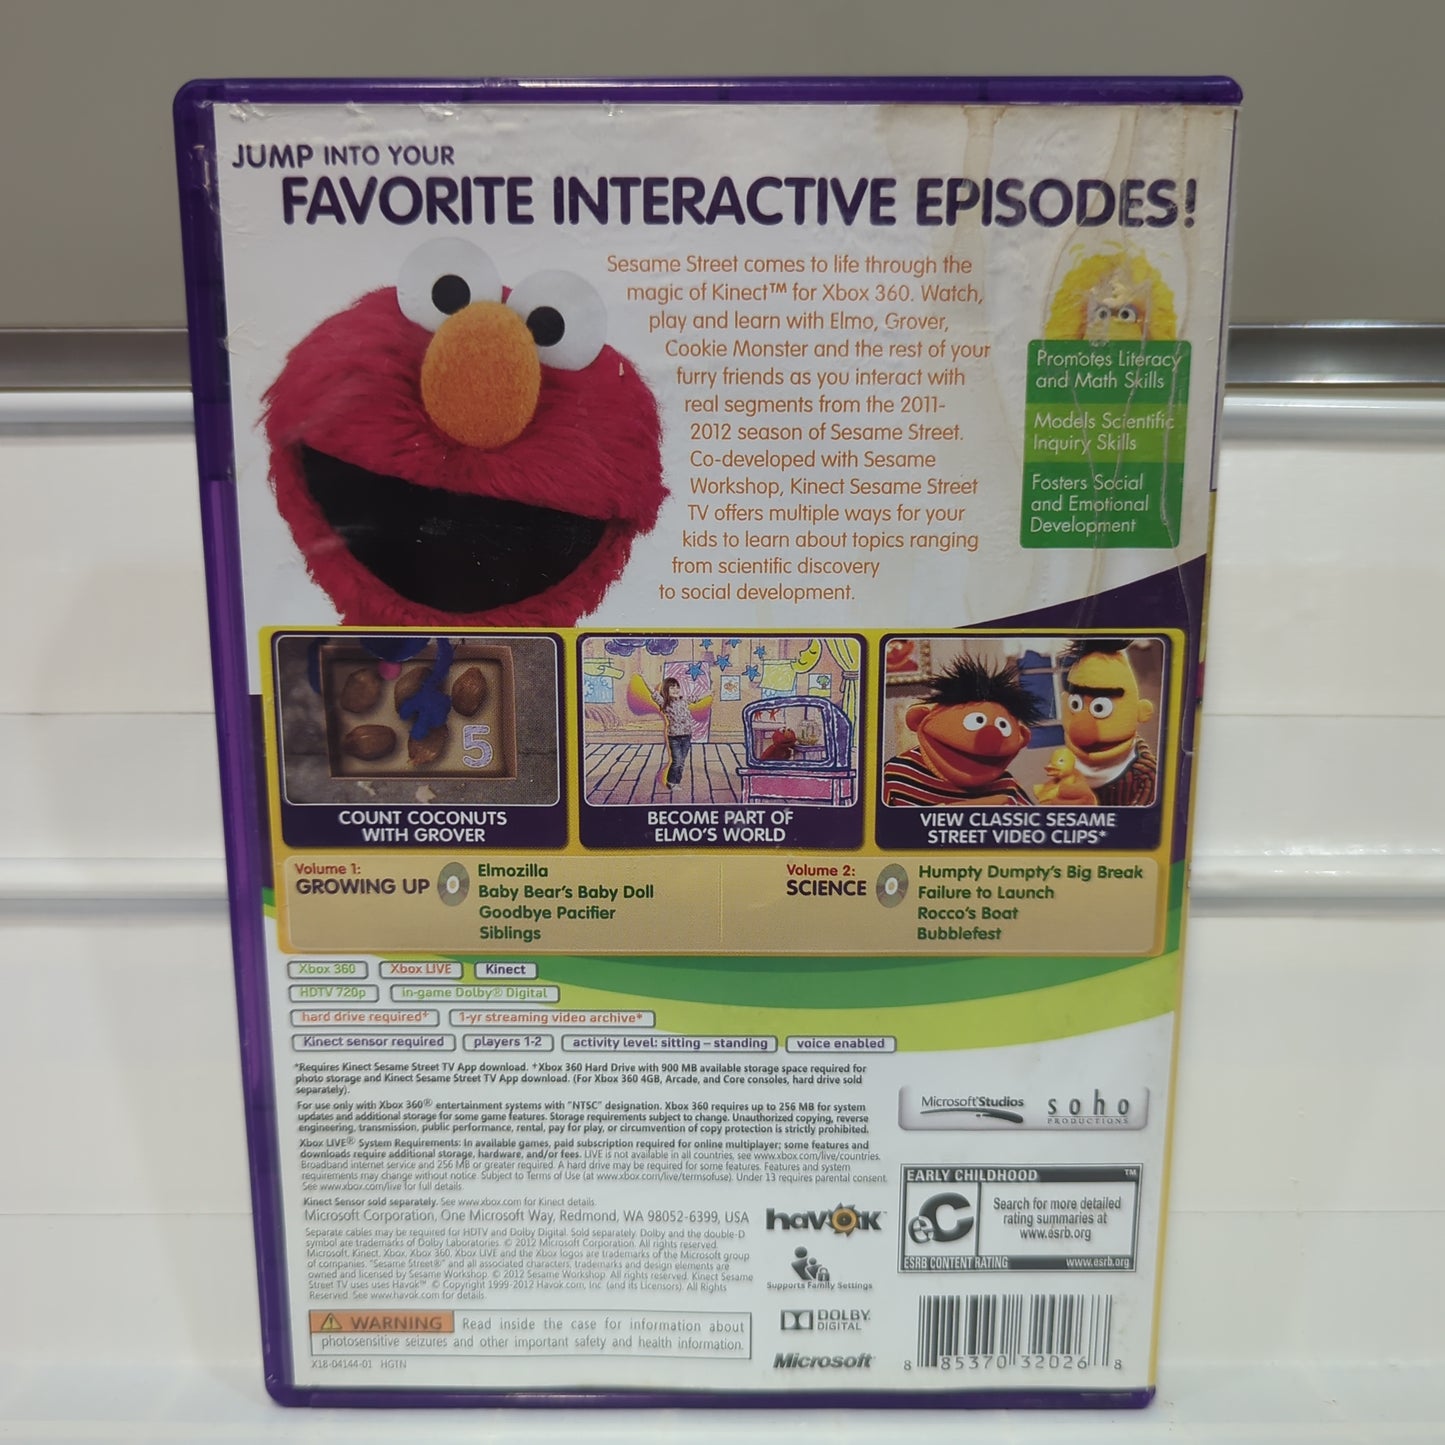 Kinect Sesame Street TV - Xbox 360